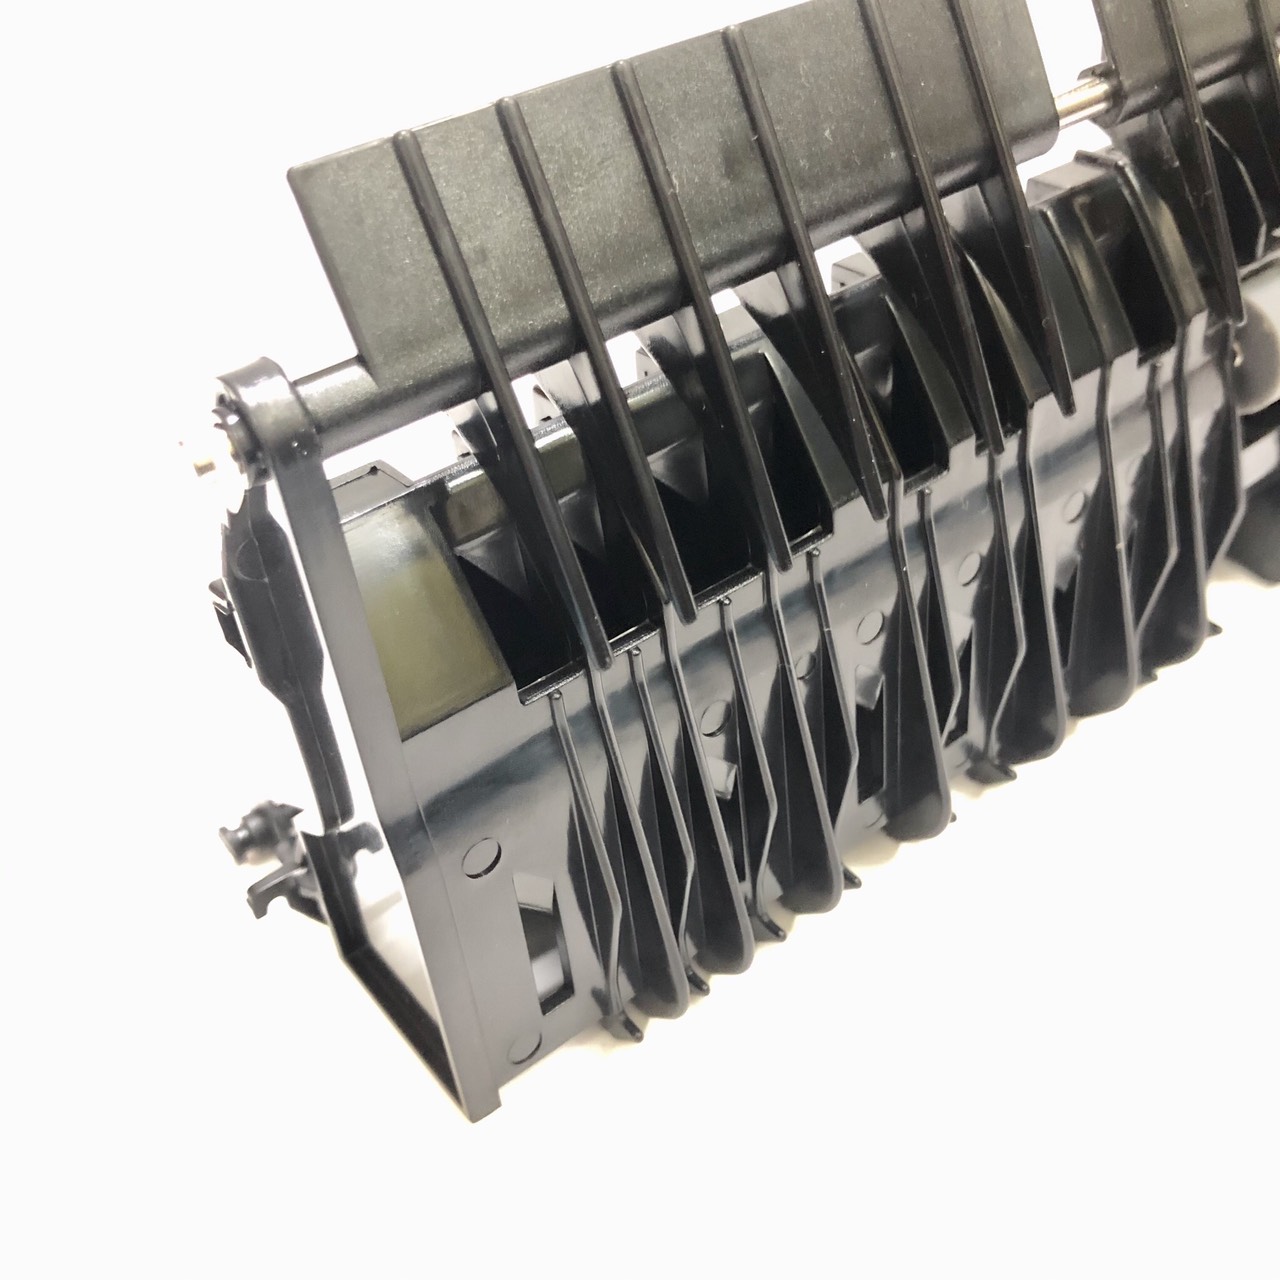 Ốp duplex máy photocopy dùng cho Ricoh MP4000, 5000, 4001, 5001, 4002, 5002, 5003